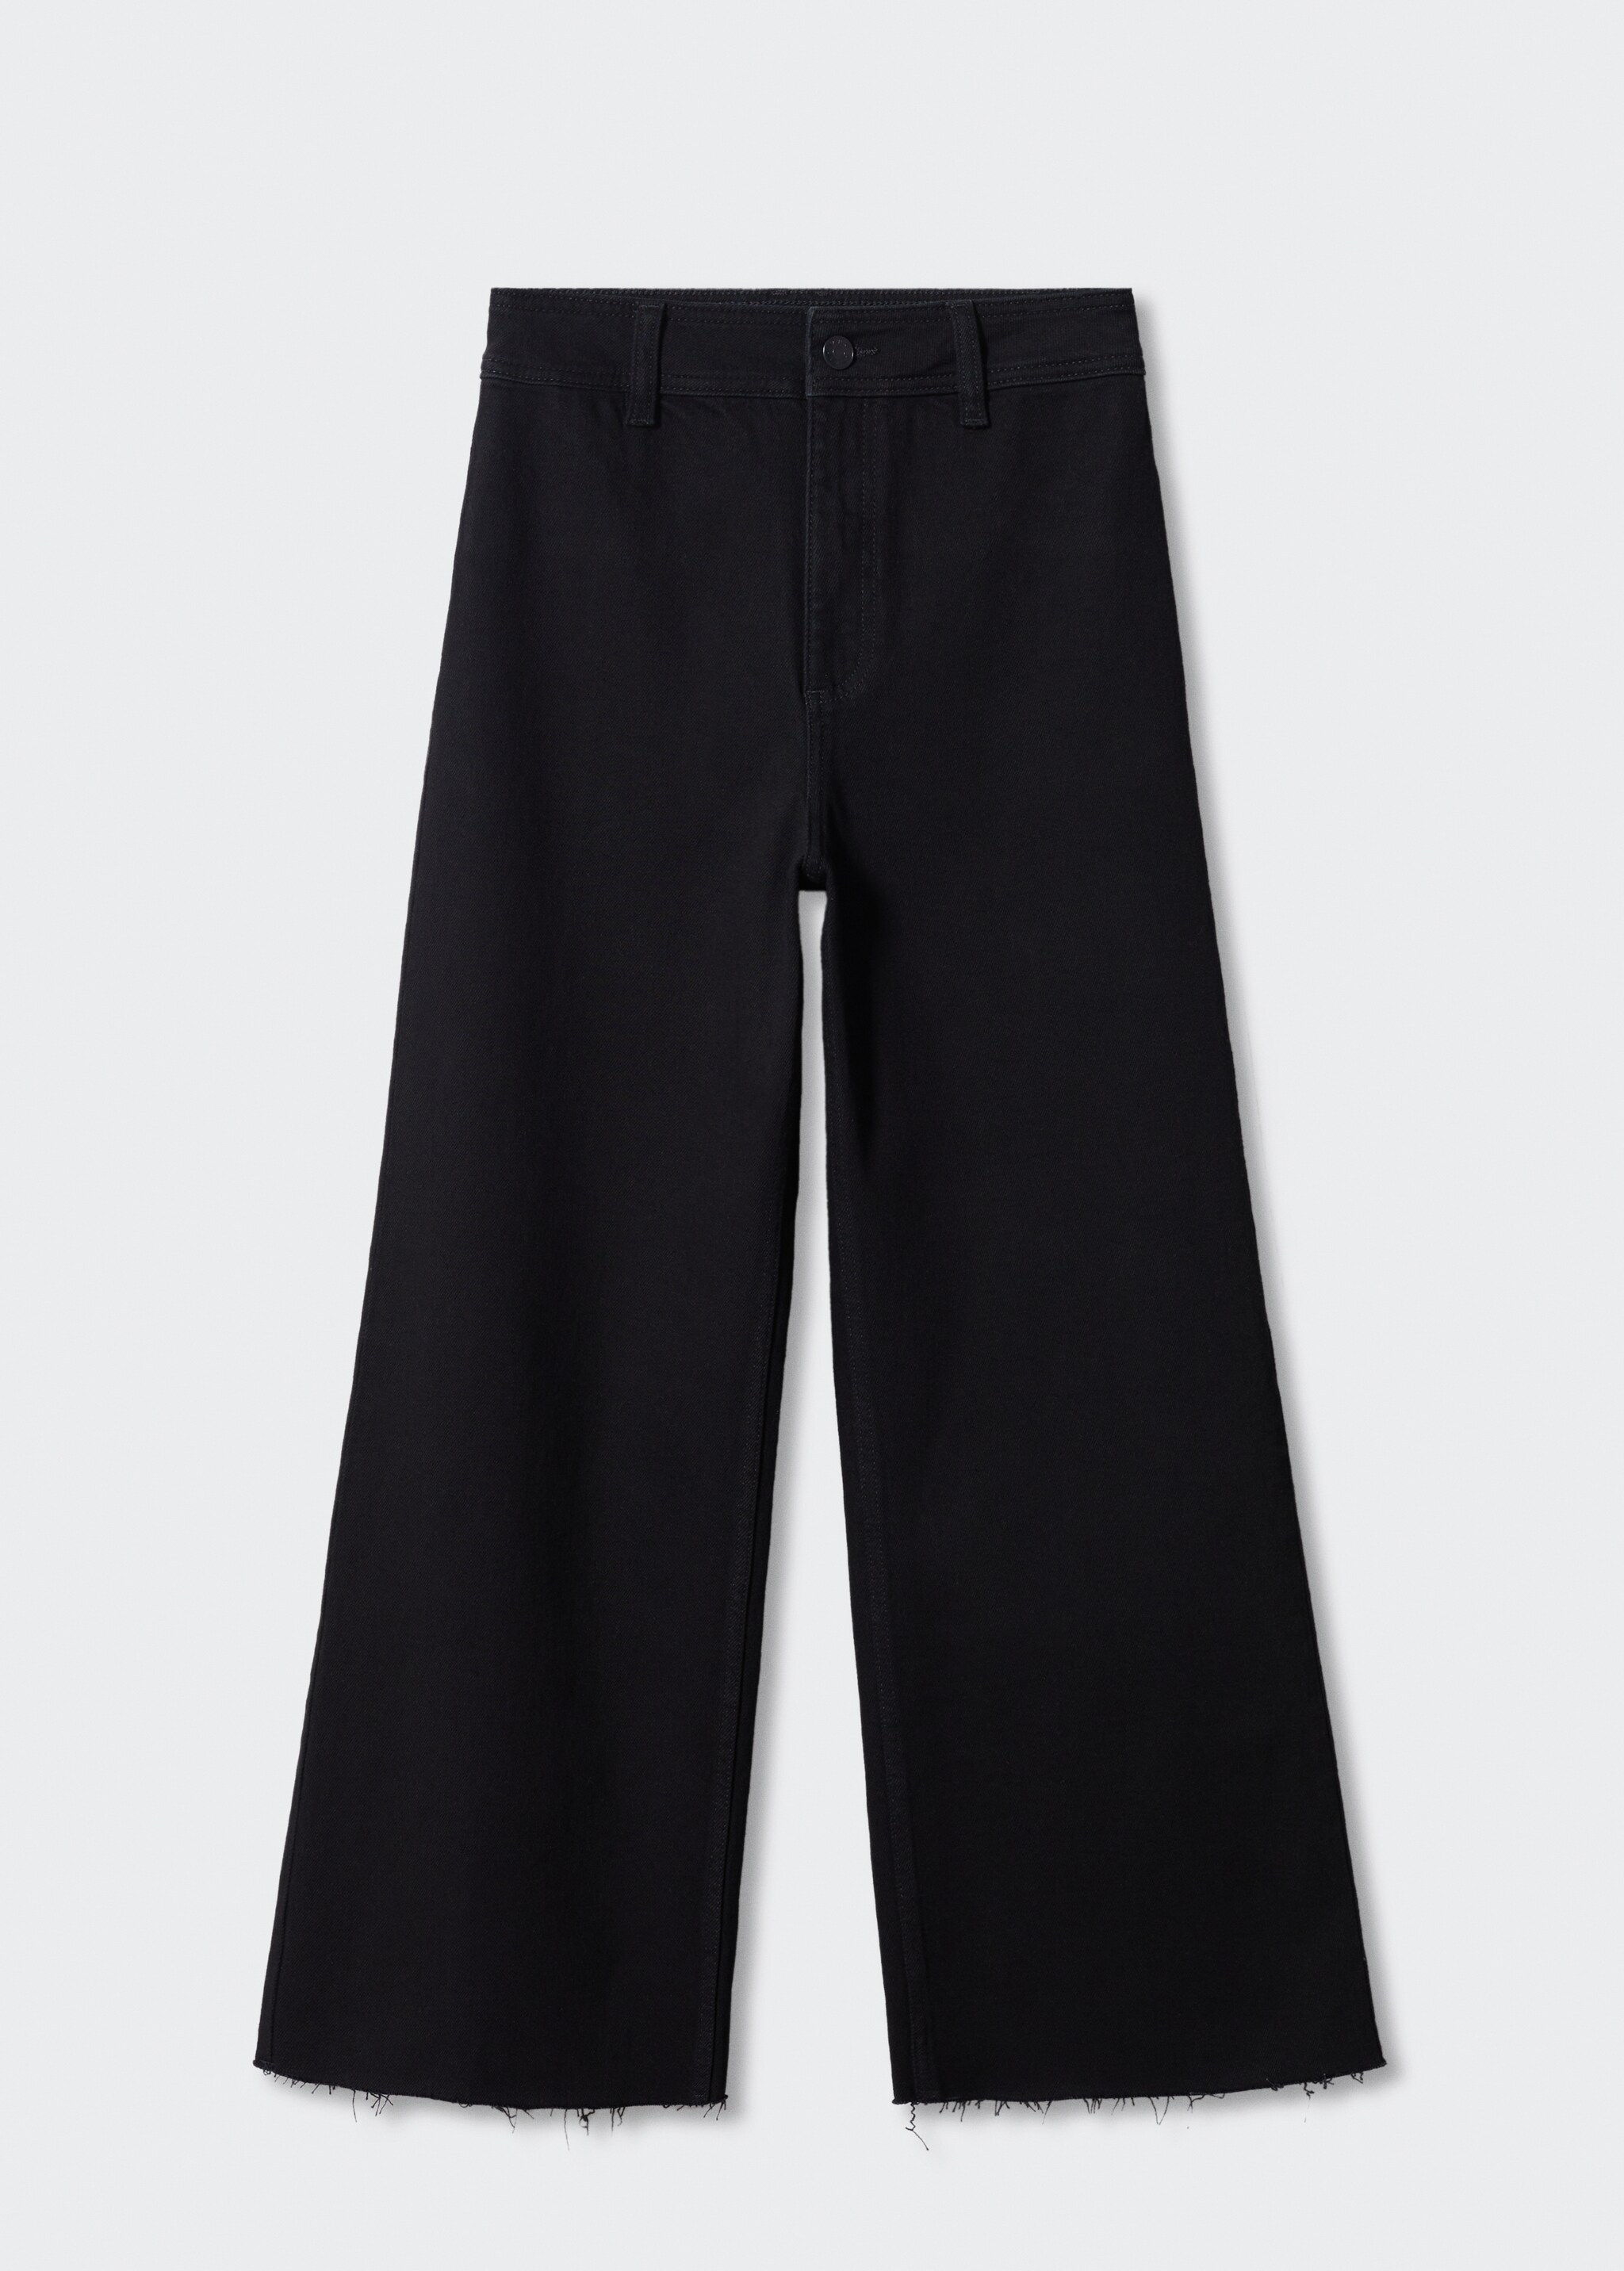 Yüksek bel culotte jean pantolon  - Modelsiz ürün